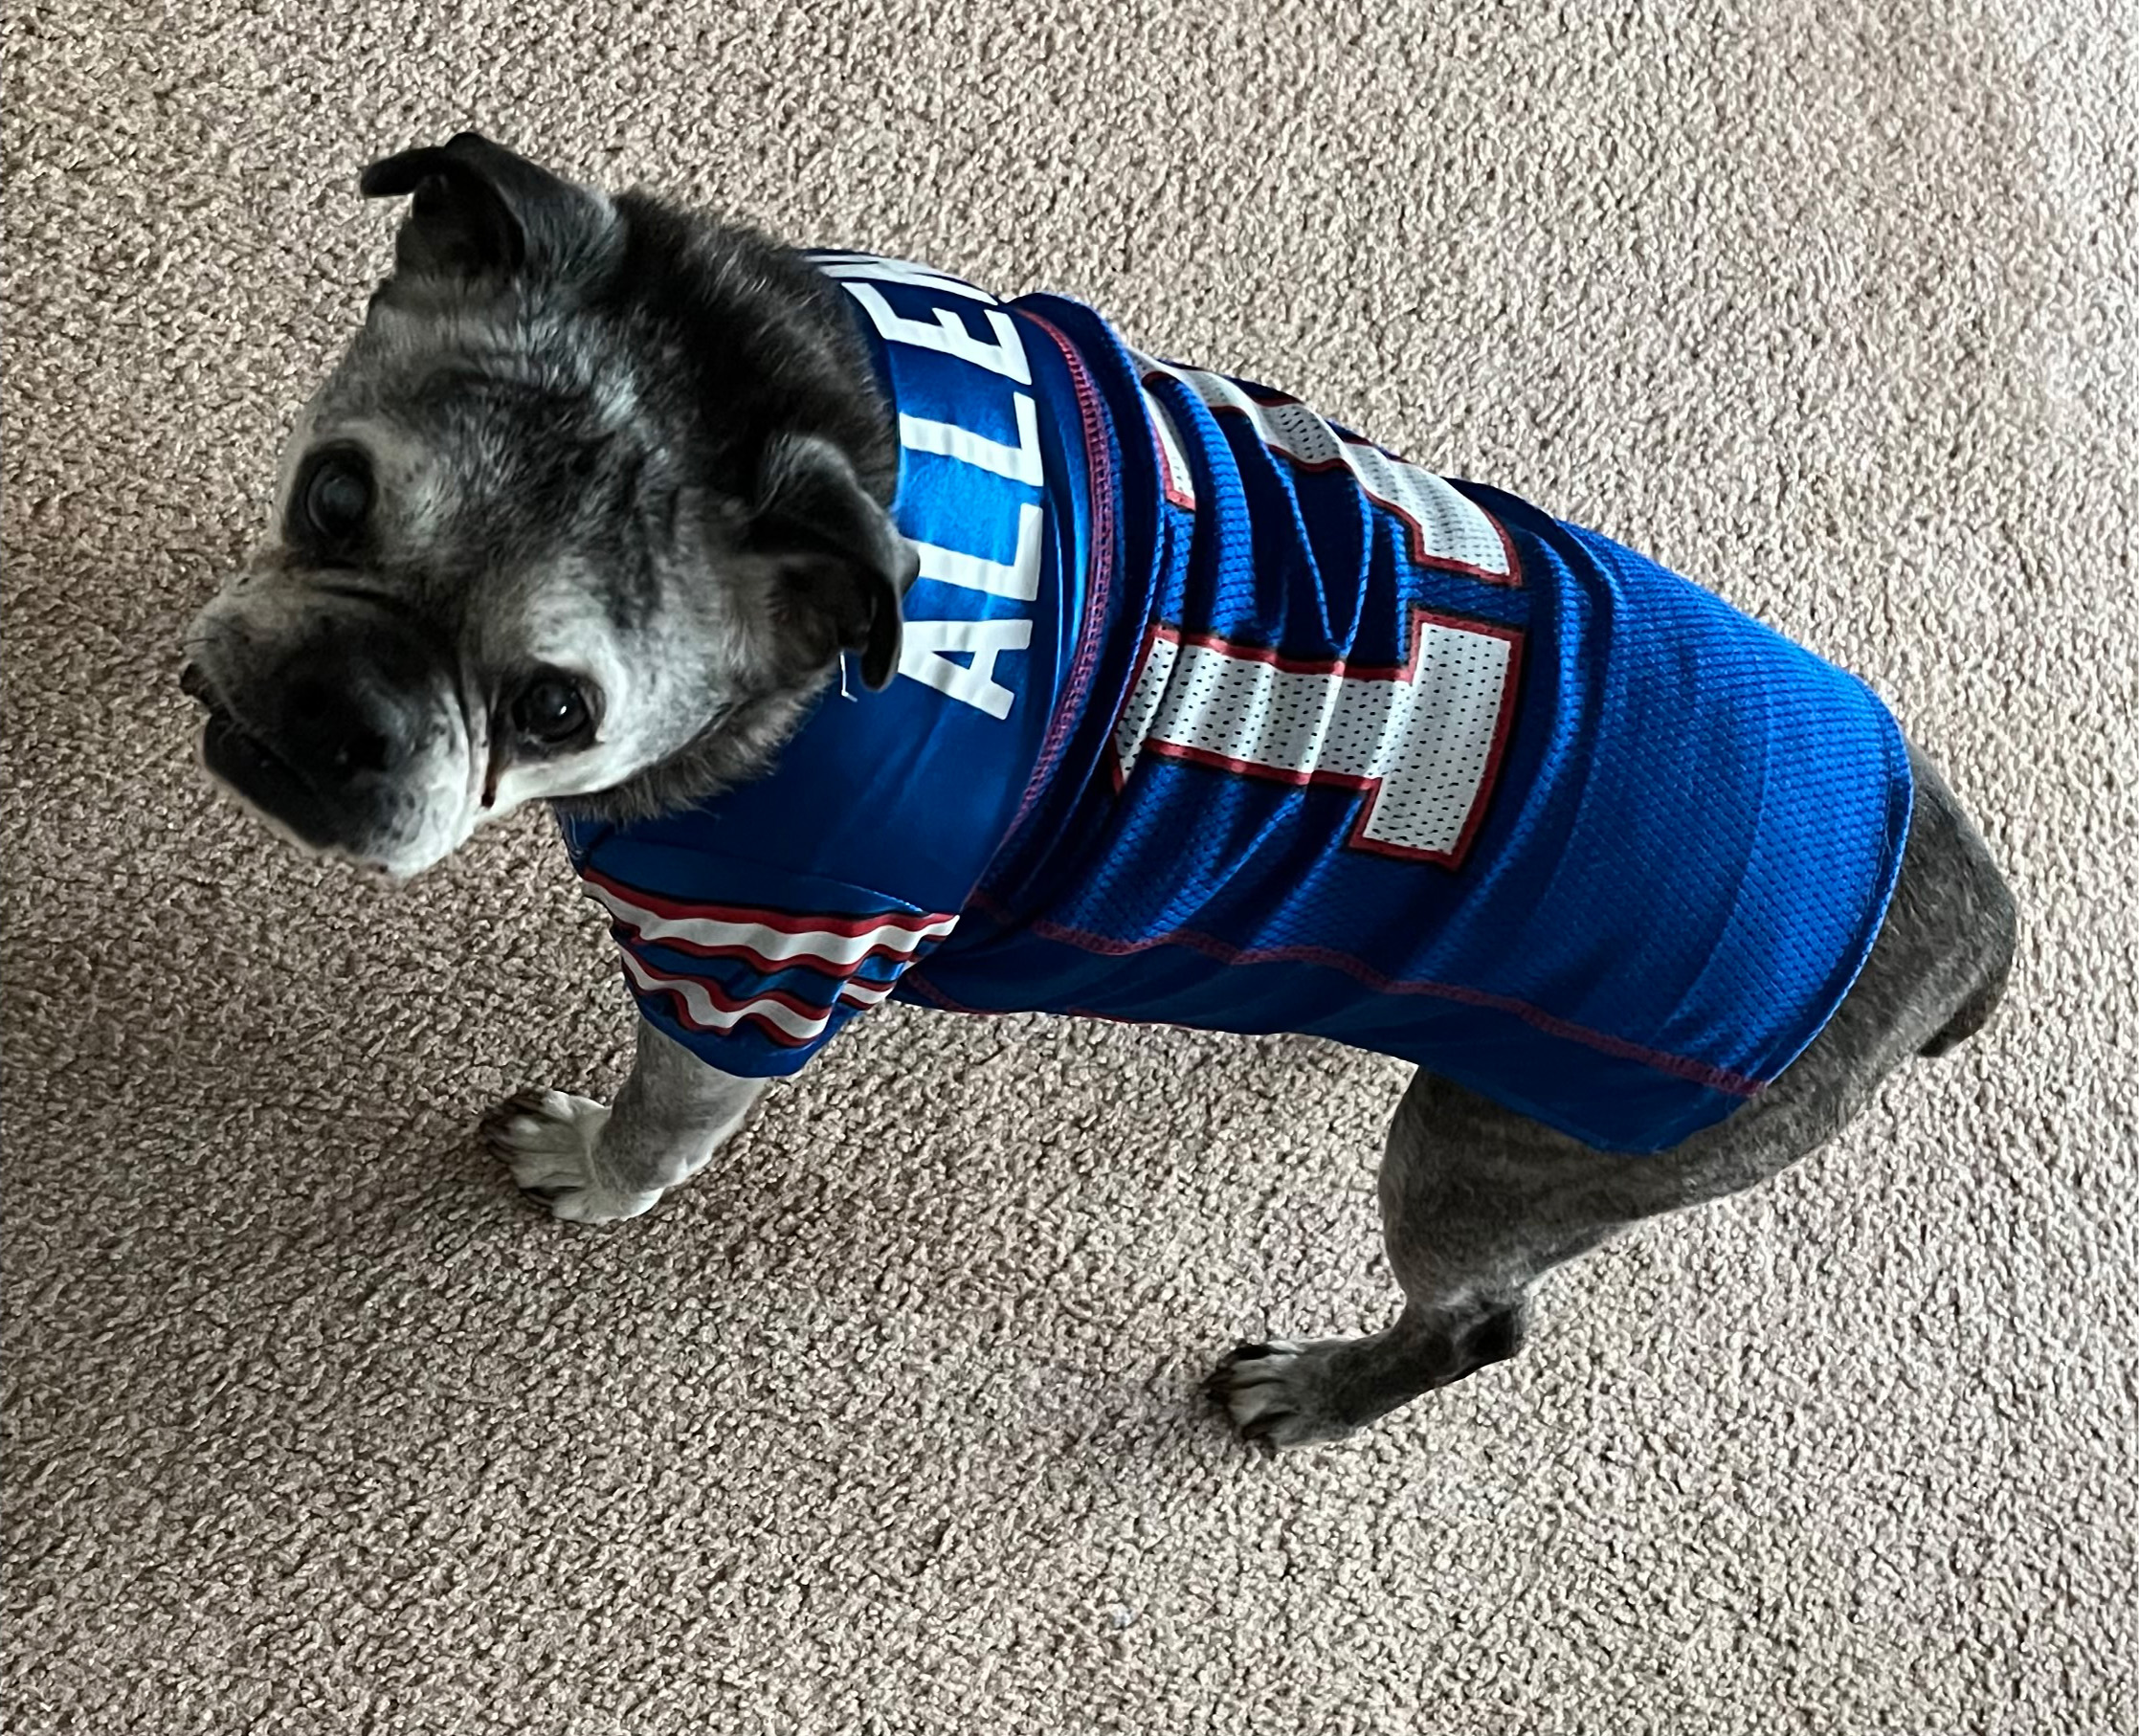 Small dog in a Josh Allen jersey